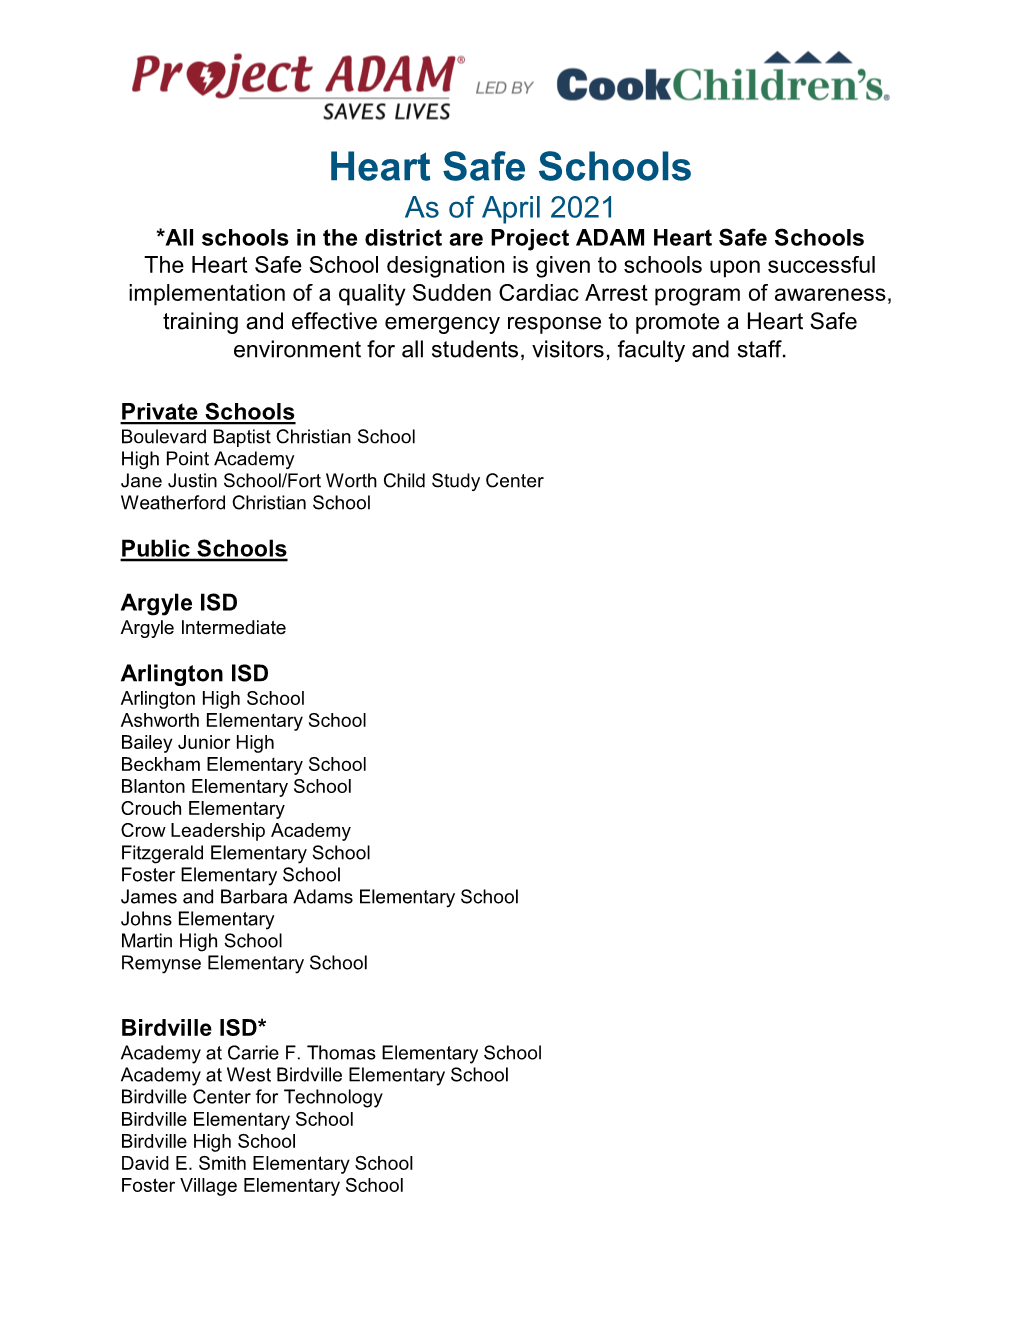 Project ADAM Texas Heart Safe Schools